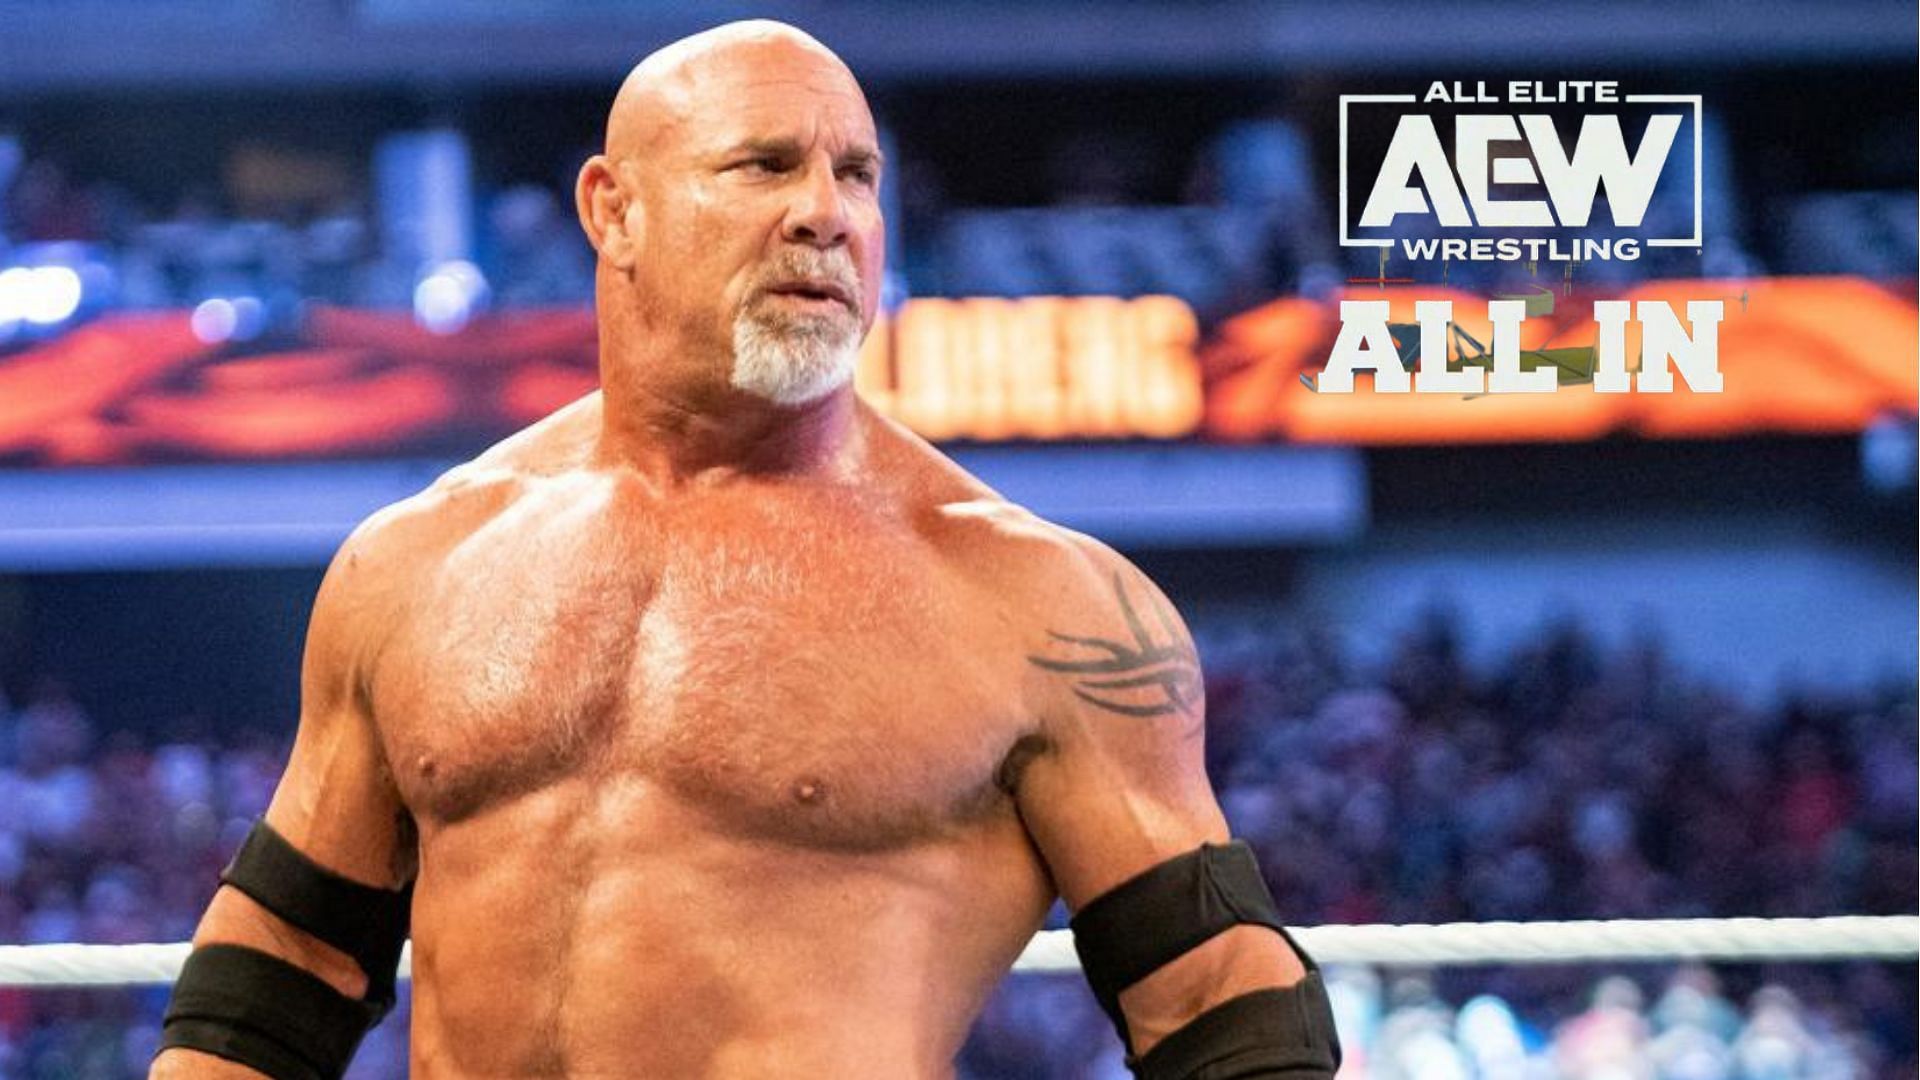 Goldberg is former WWE Universal Champion